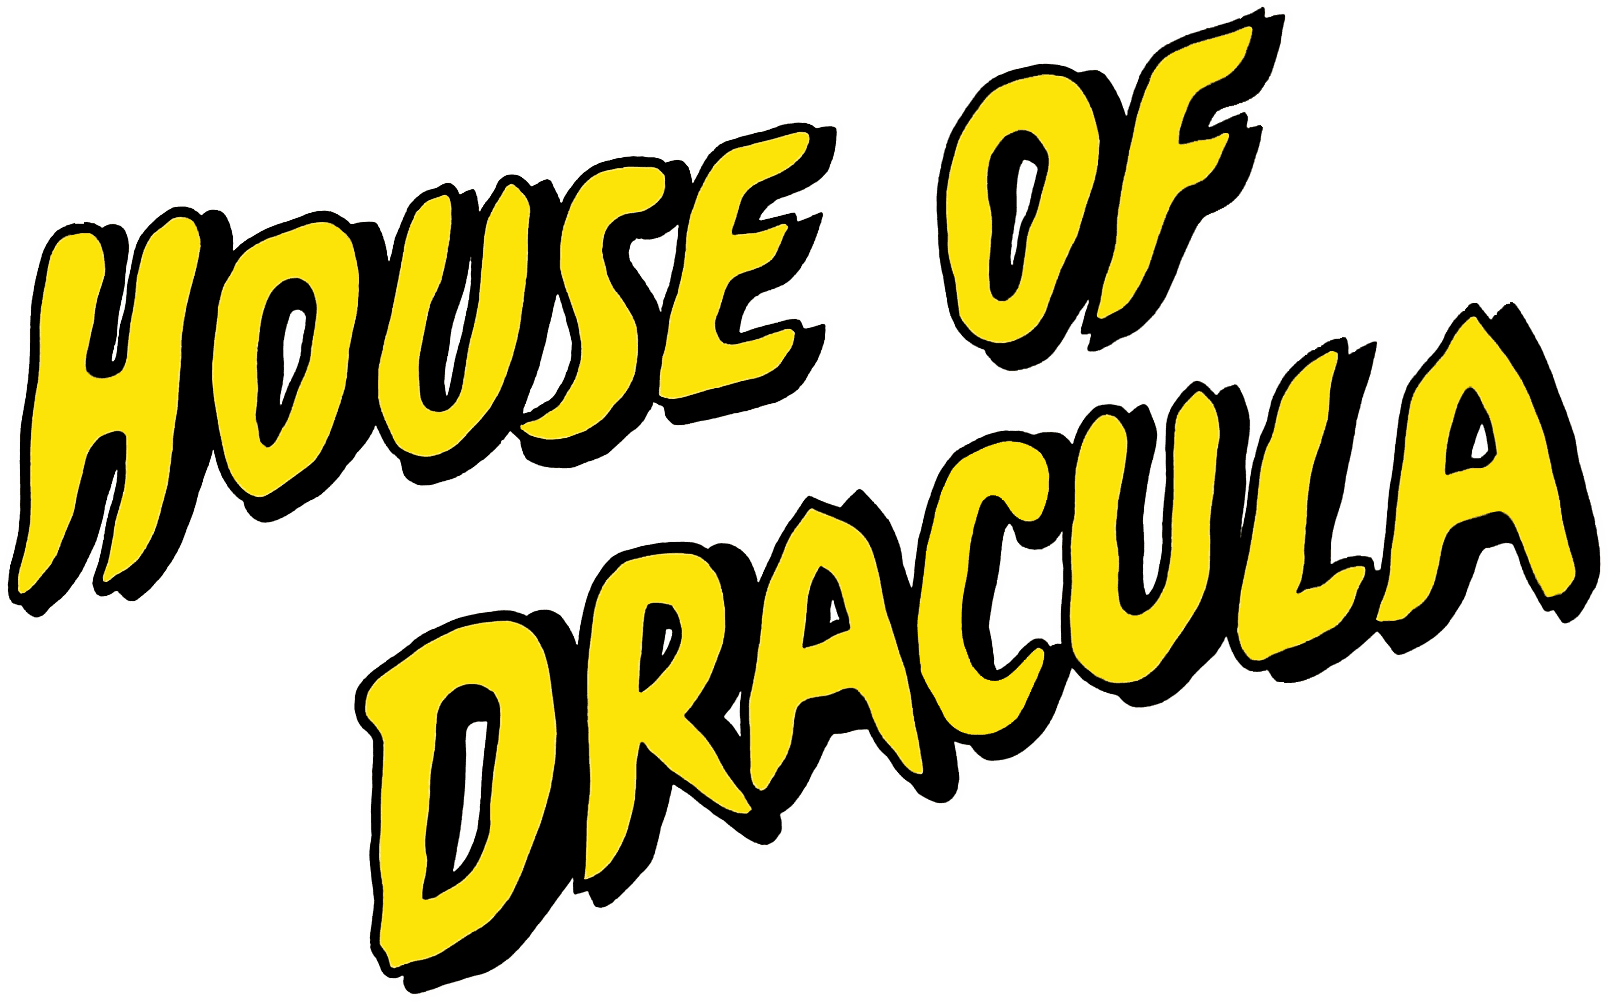 House of Dracula logo